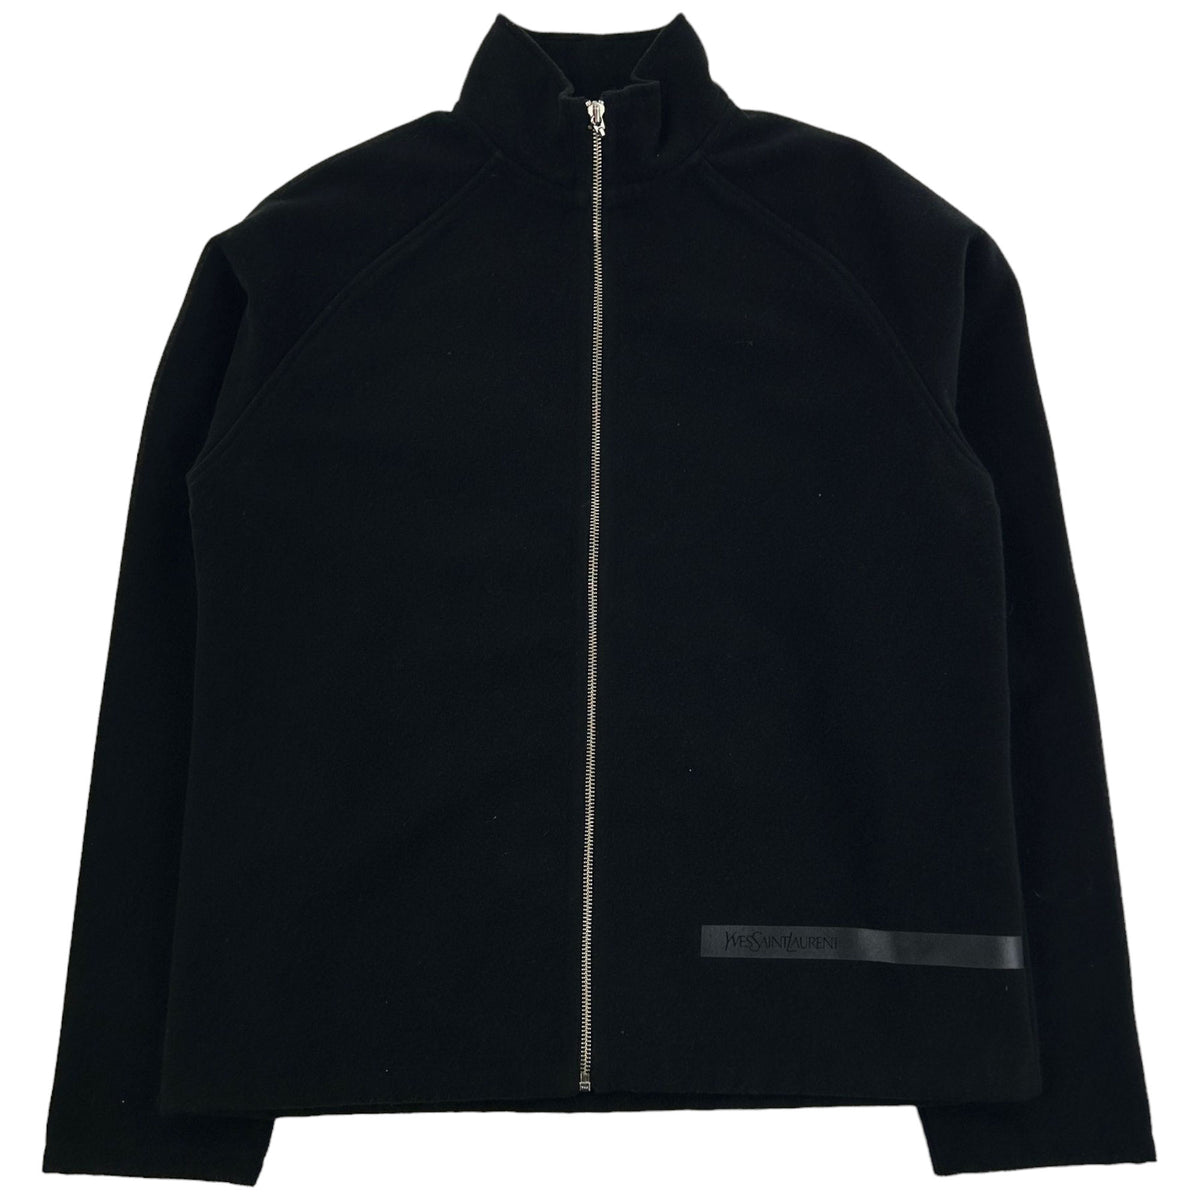 Vintage Yves Saint Laurent Fleece Jacket Size M